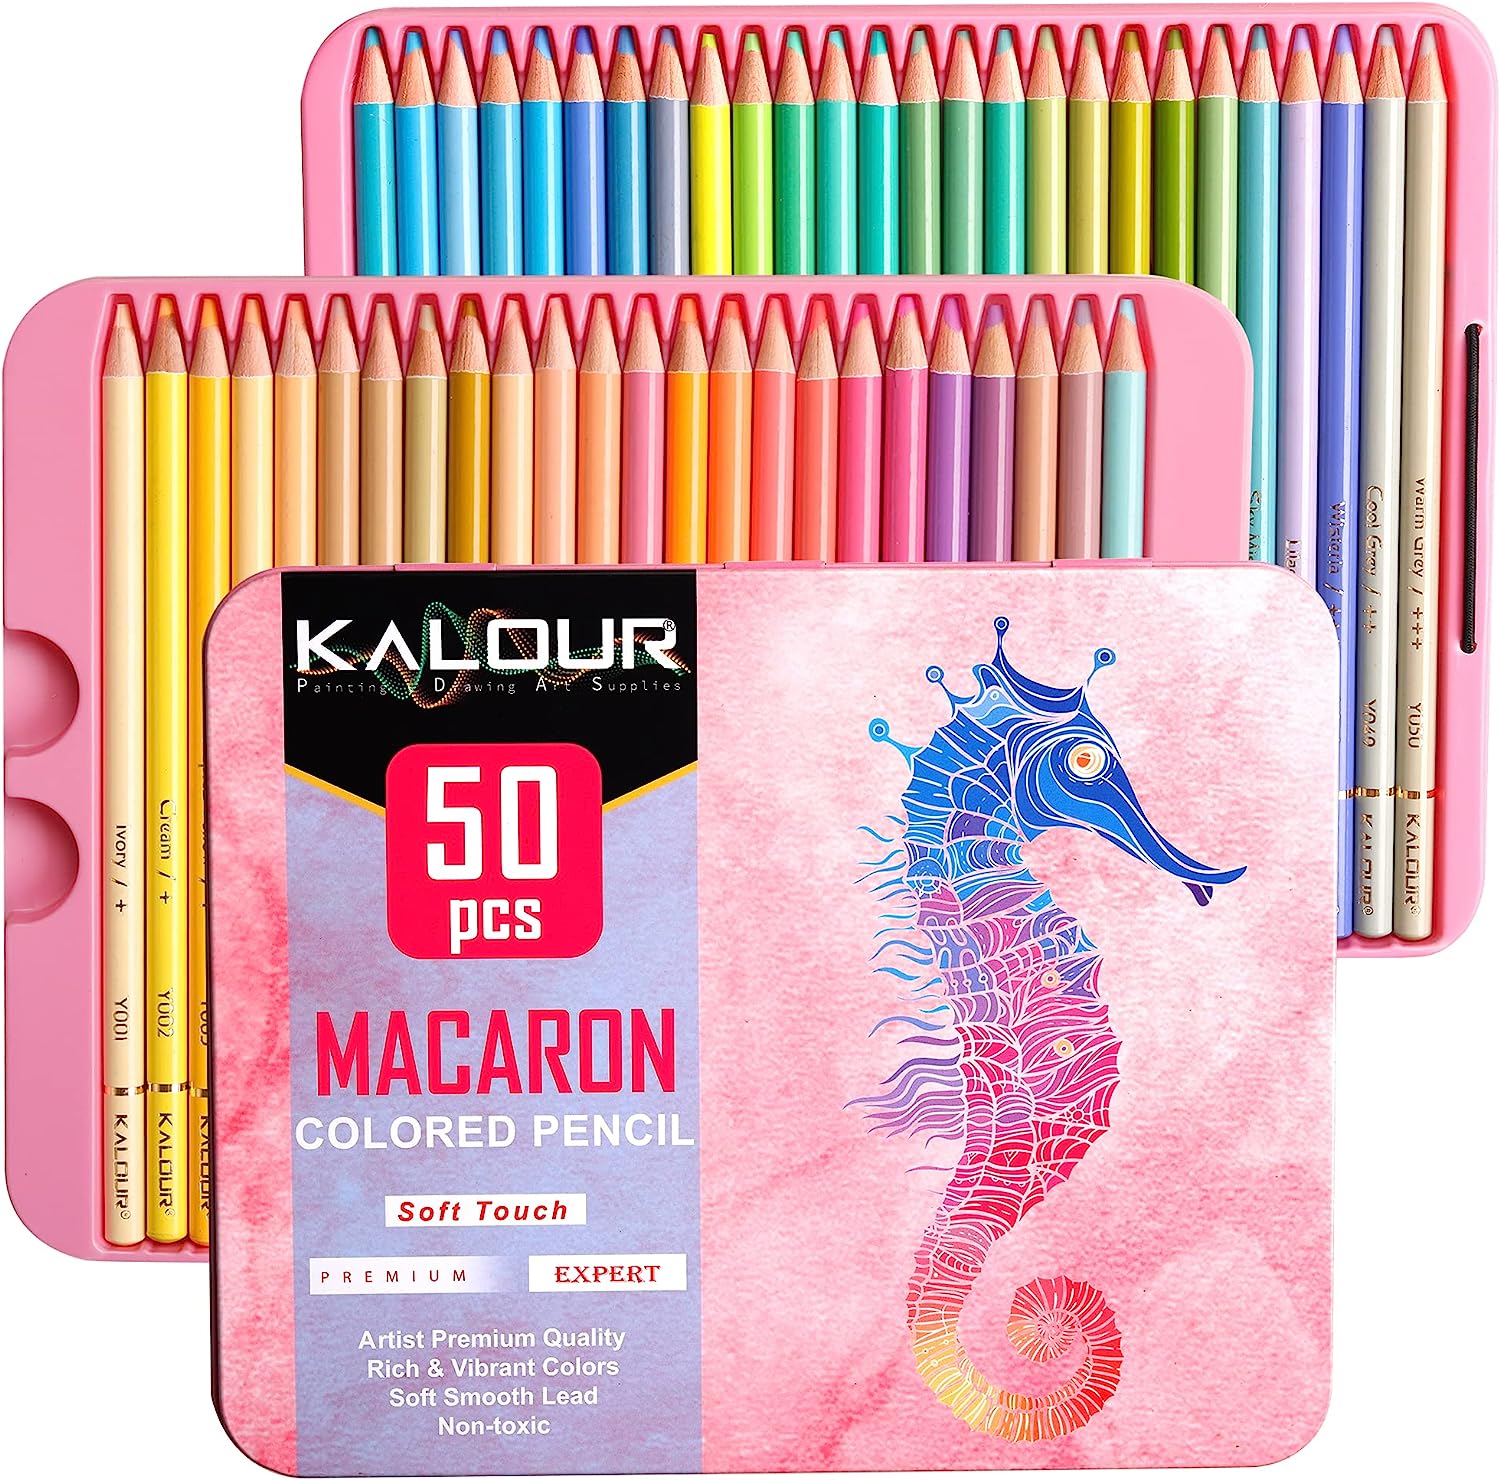 KALOUR 50 Piece Metallic Colored Pencils for Adult Coloring,Soft